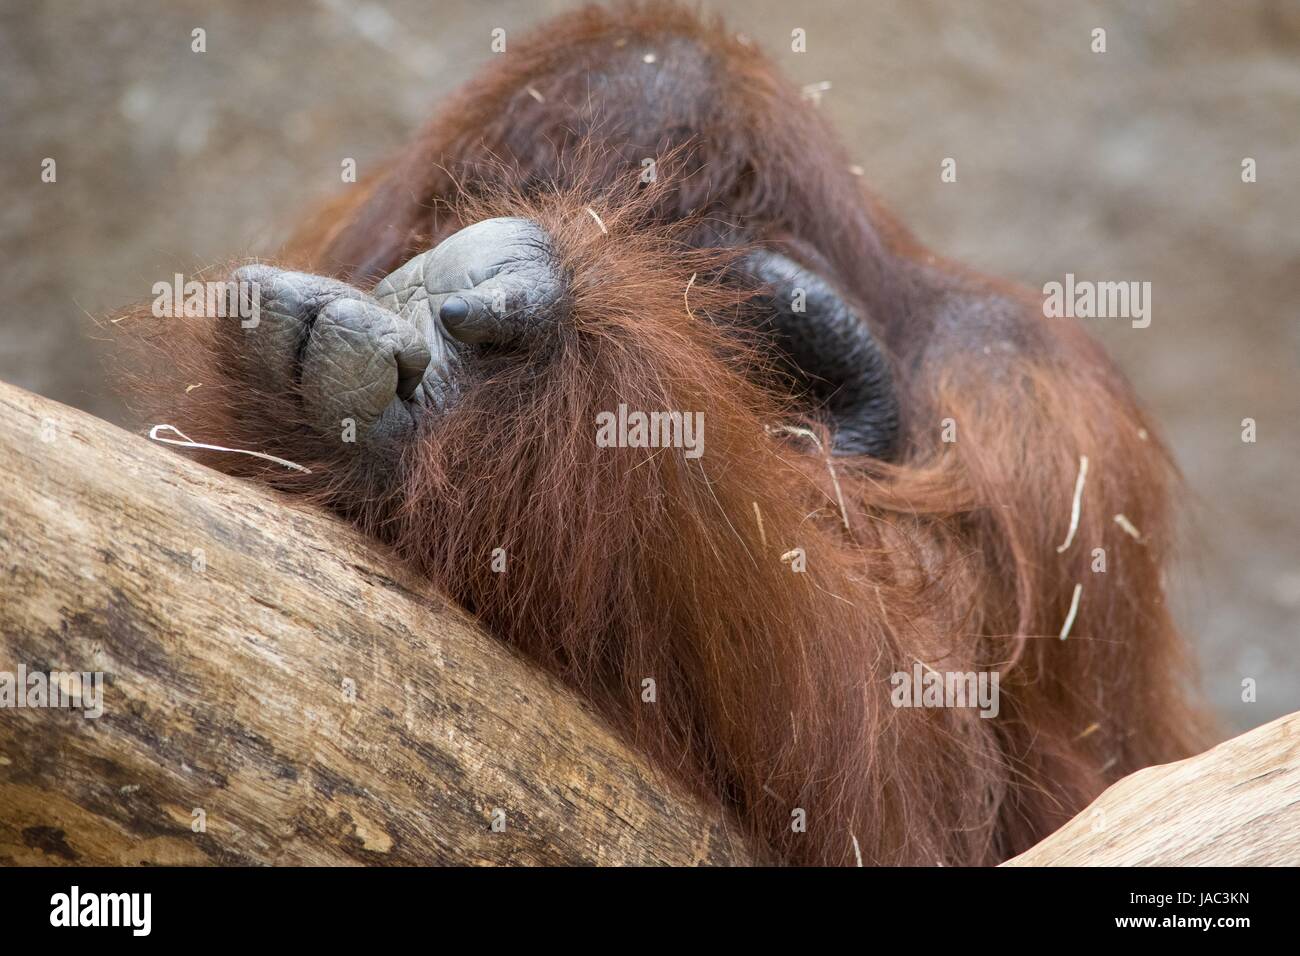 Orang-Utan, orangutan cleaning himself, orangutan showing hands Stock Photo